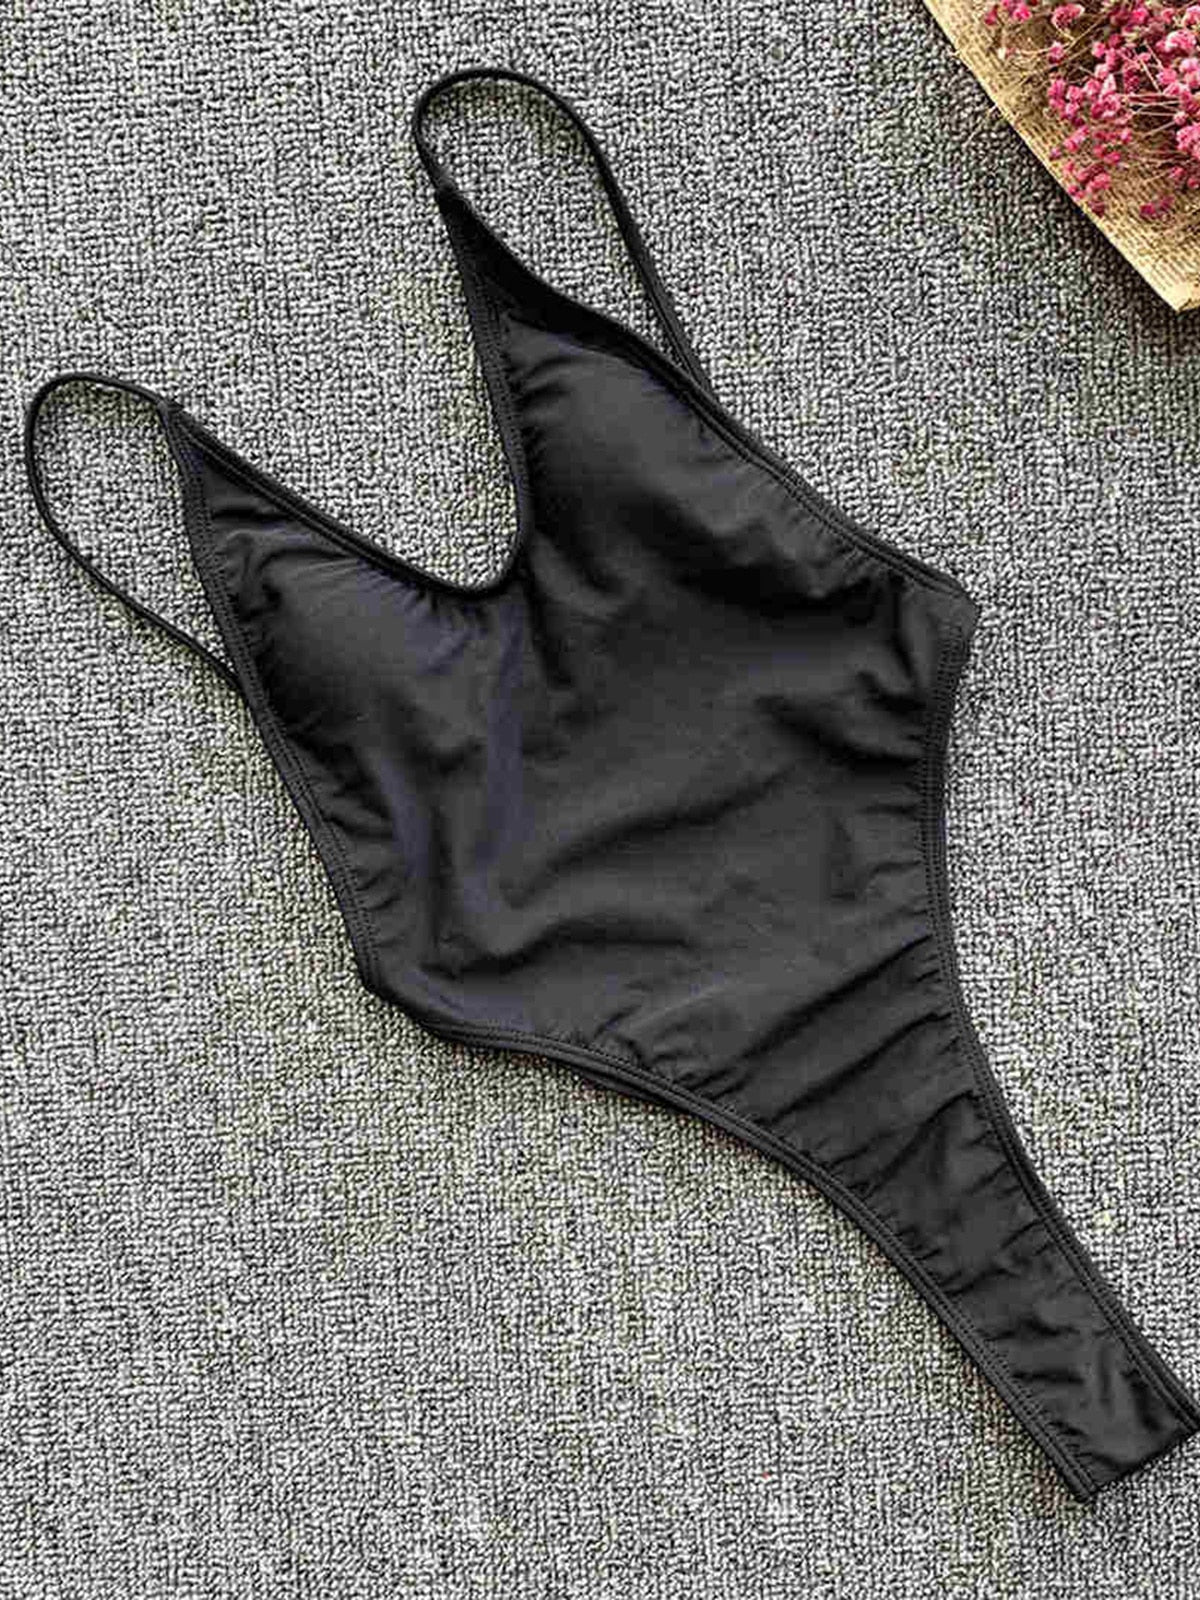 Sexy Backless Thong One Piece Swimsuit Female Bather Women Swimwear High Cut Bathing Suit Swim Beach Lady Monokini V1574